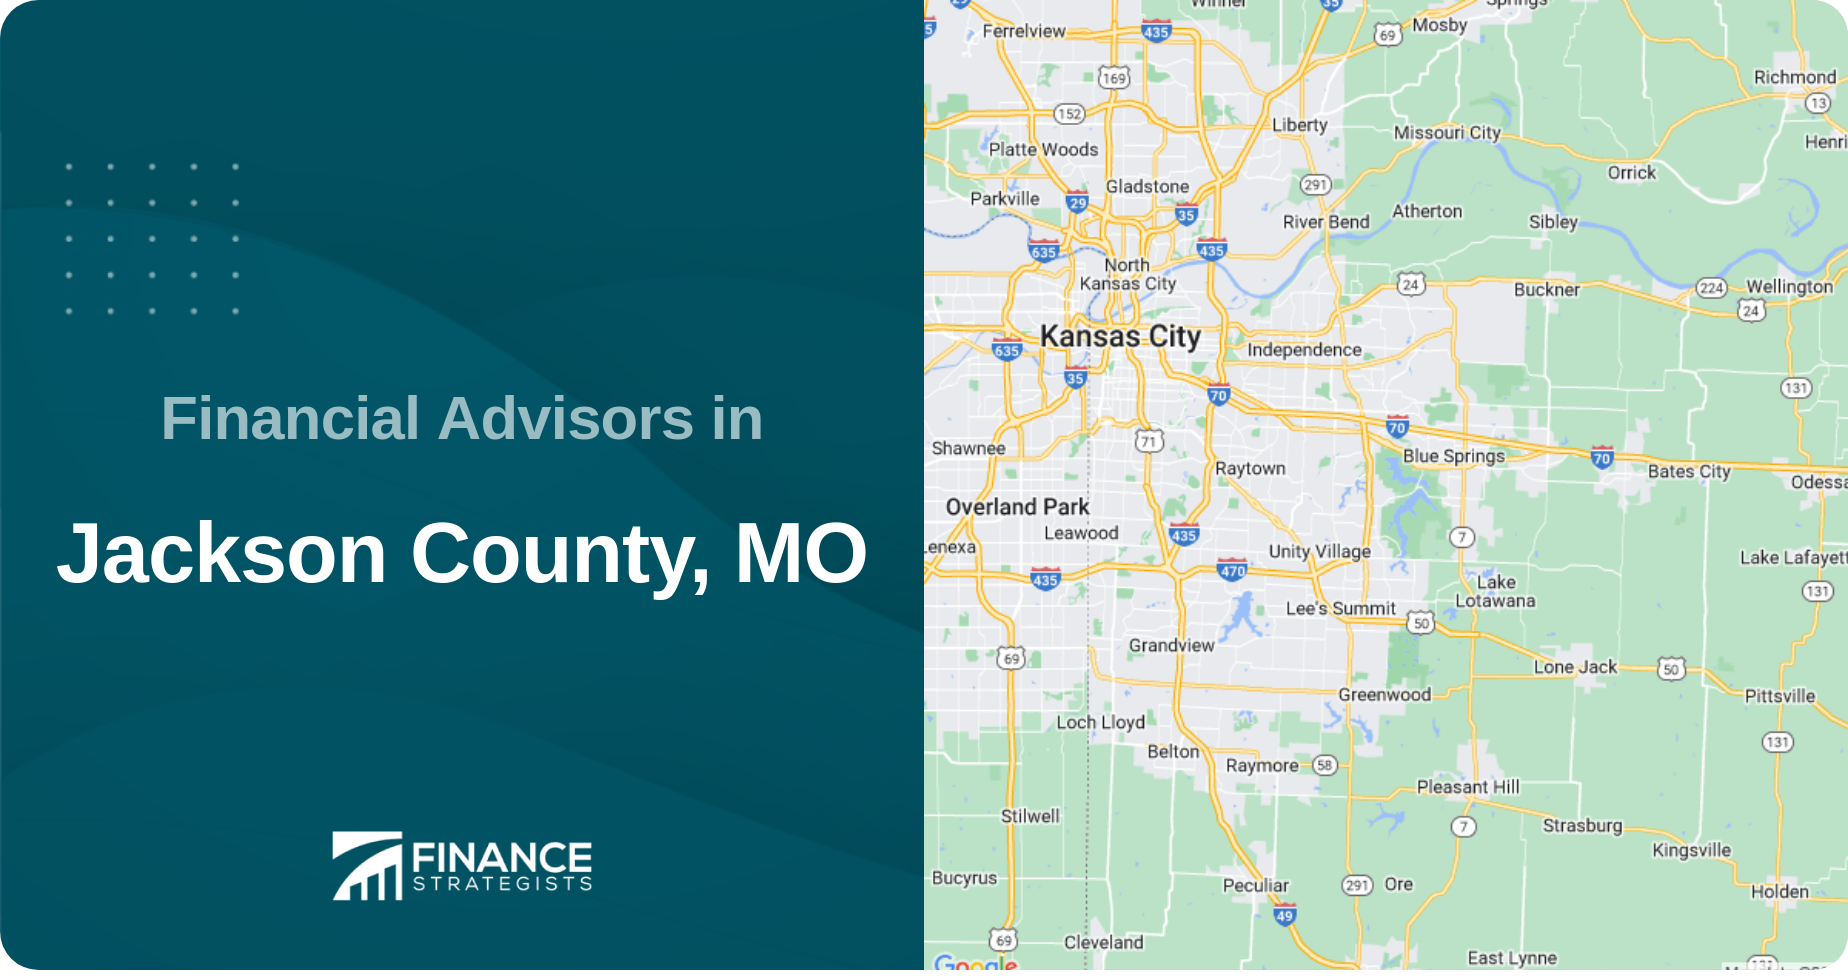 Financial Advisors in Jackson County, MO